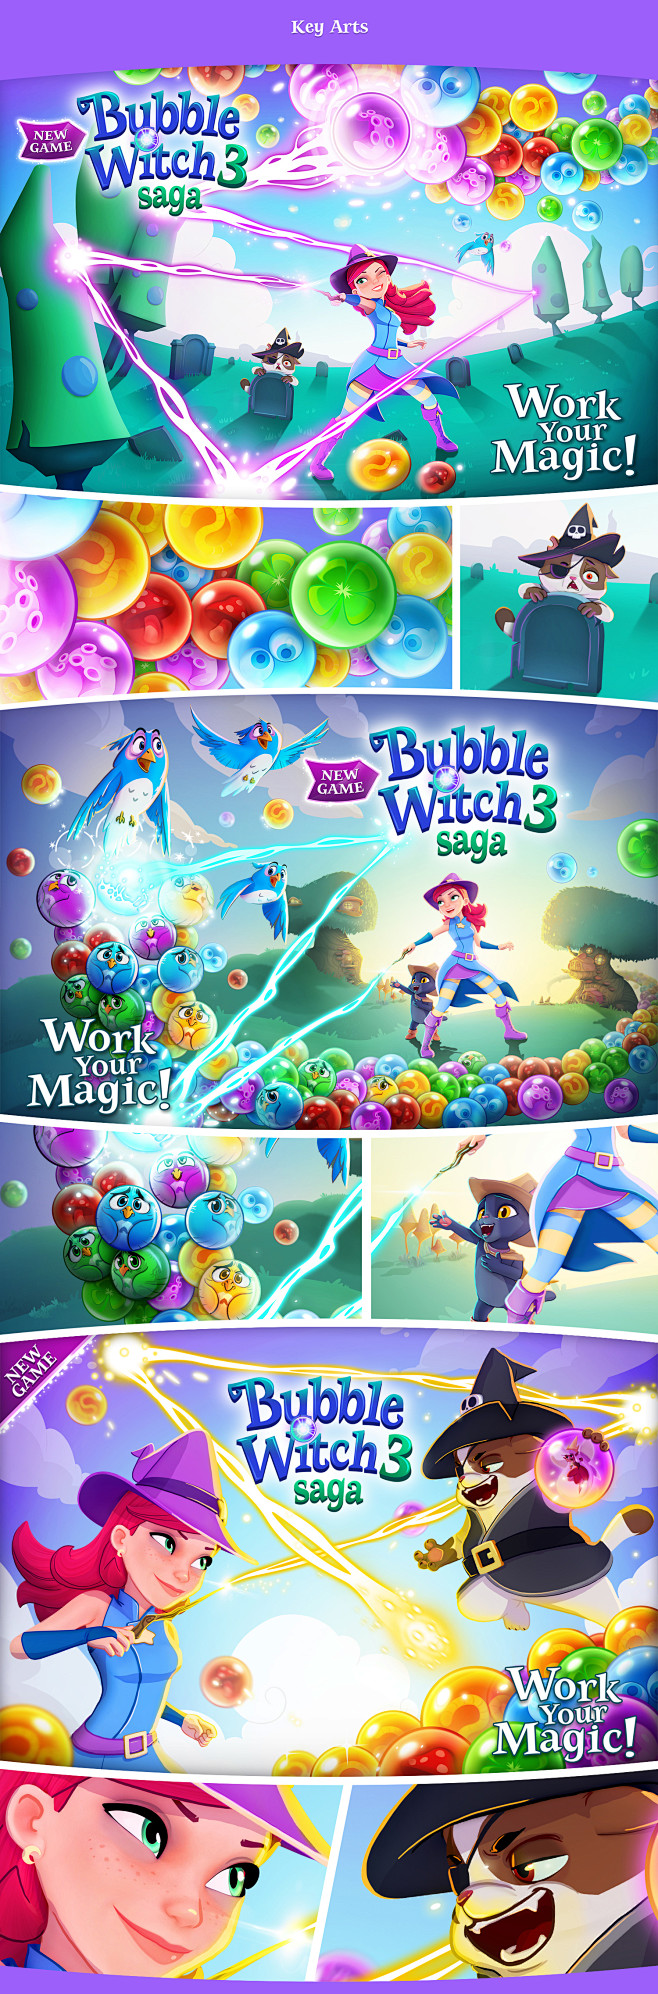 Bubble Witch 3 saga ...